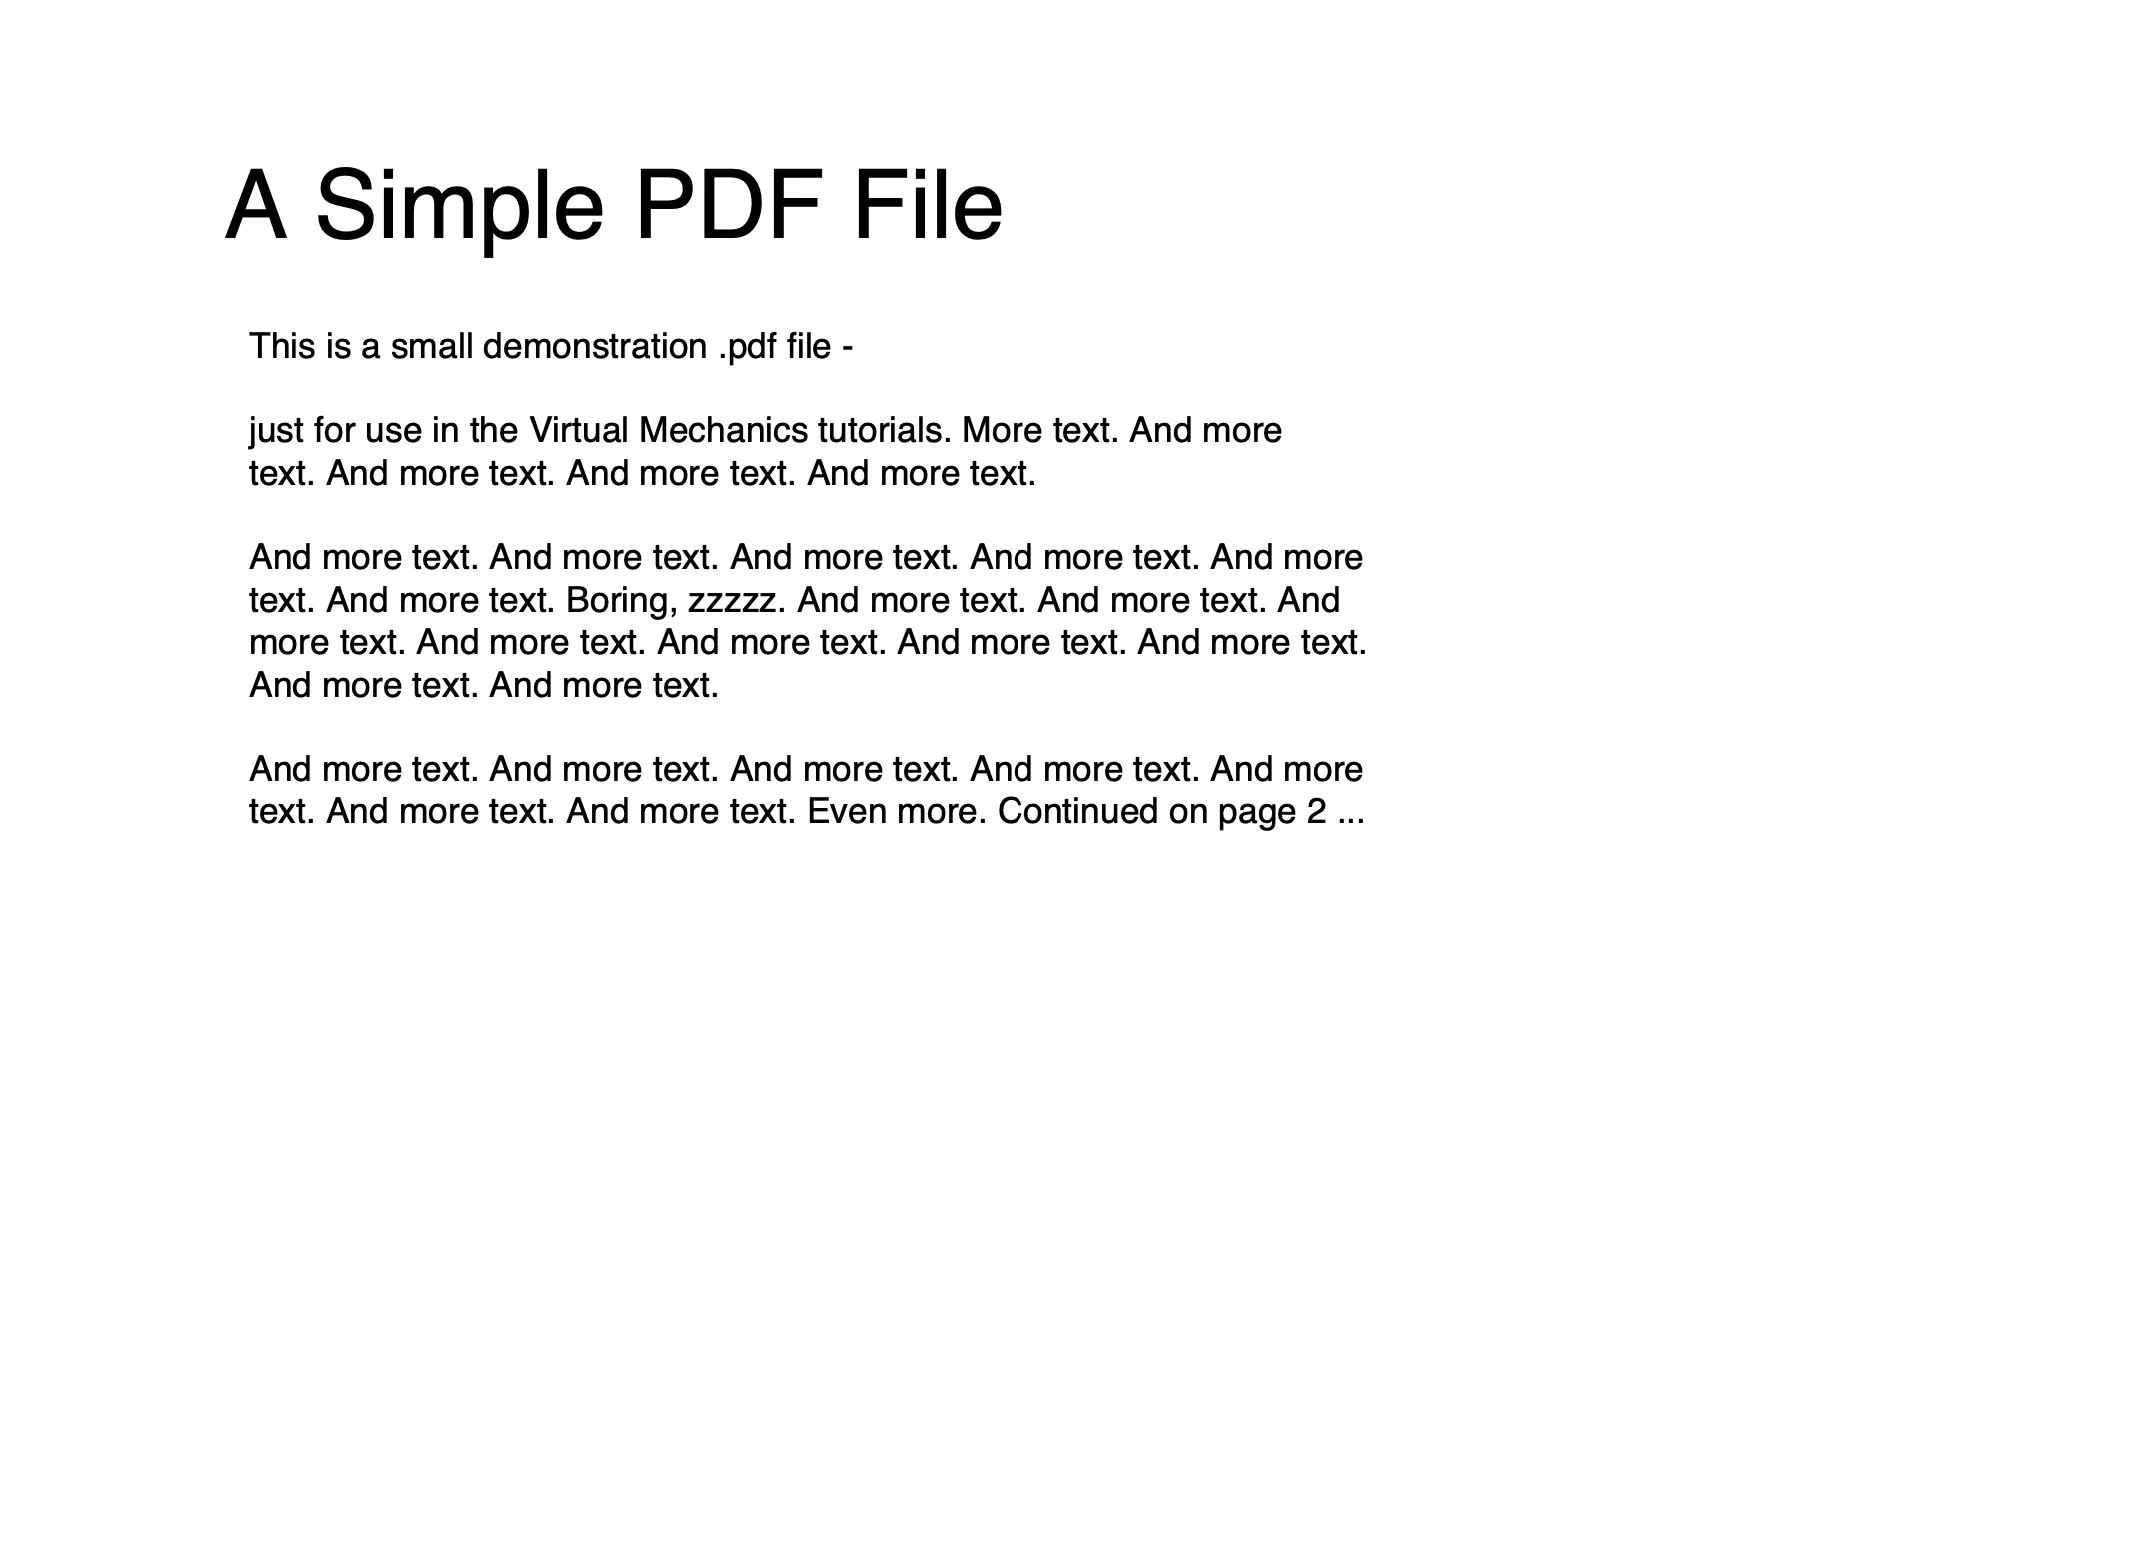 Sample PDF file